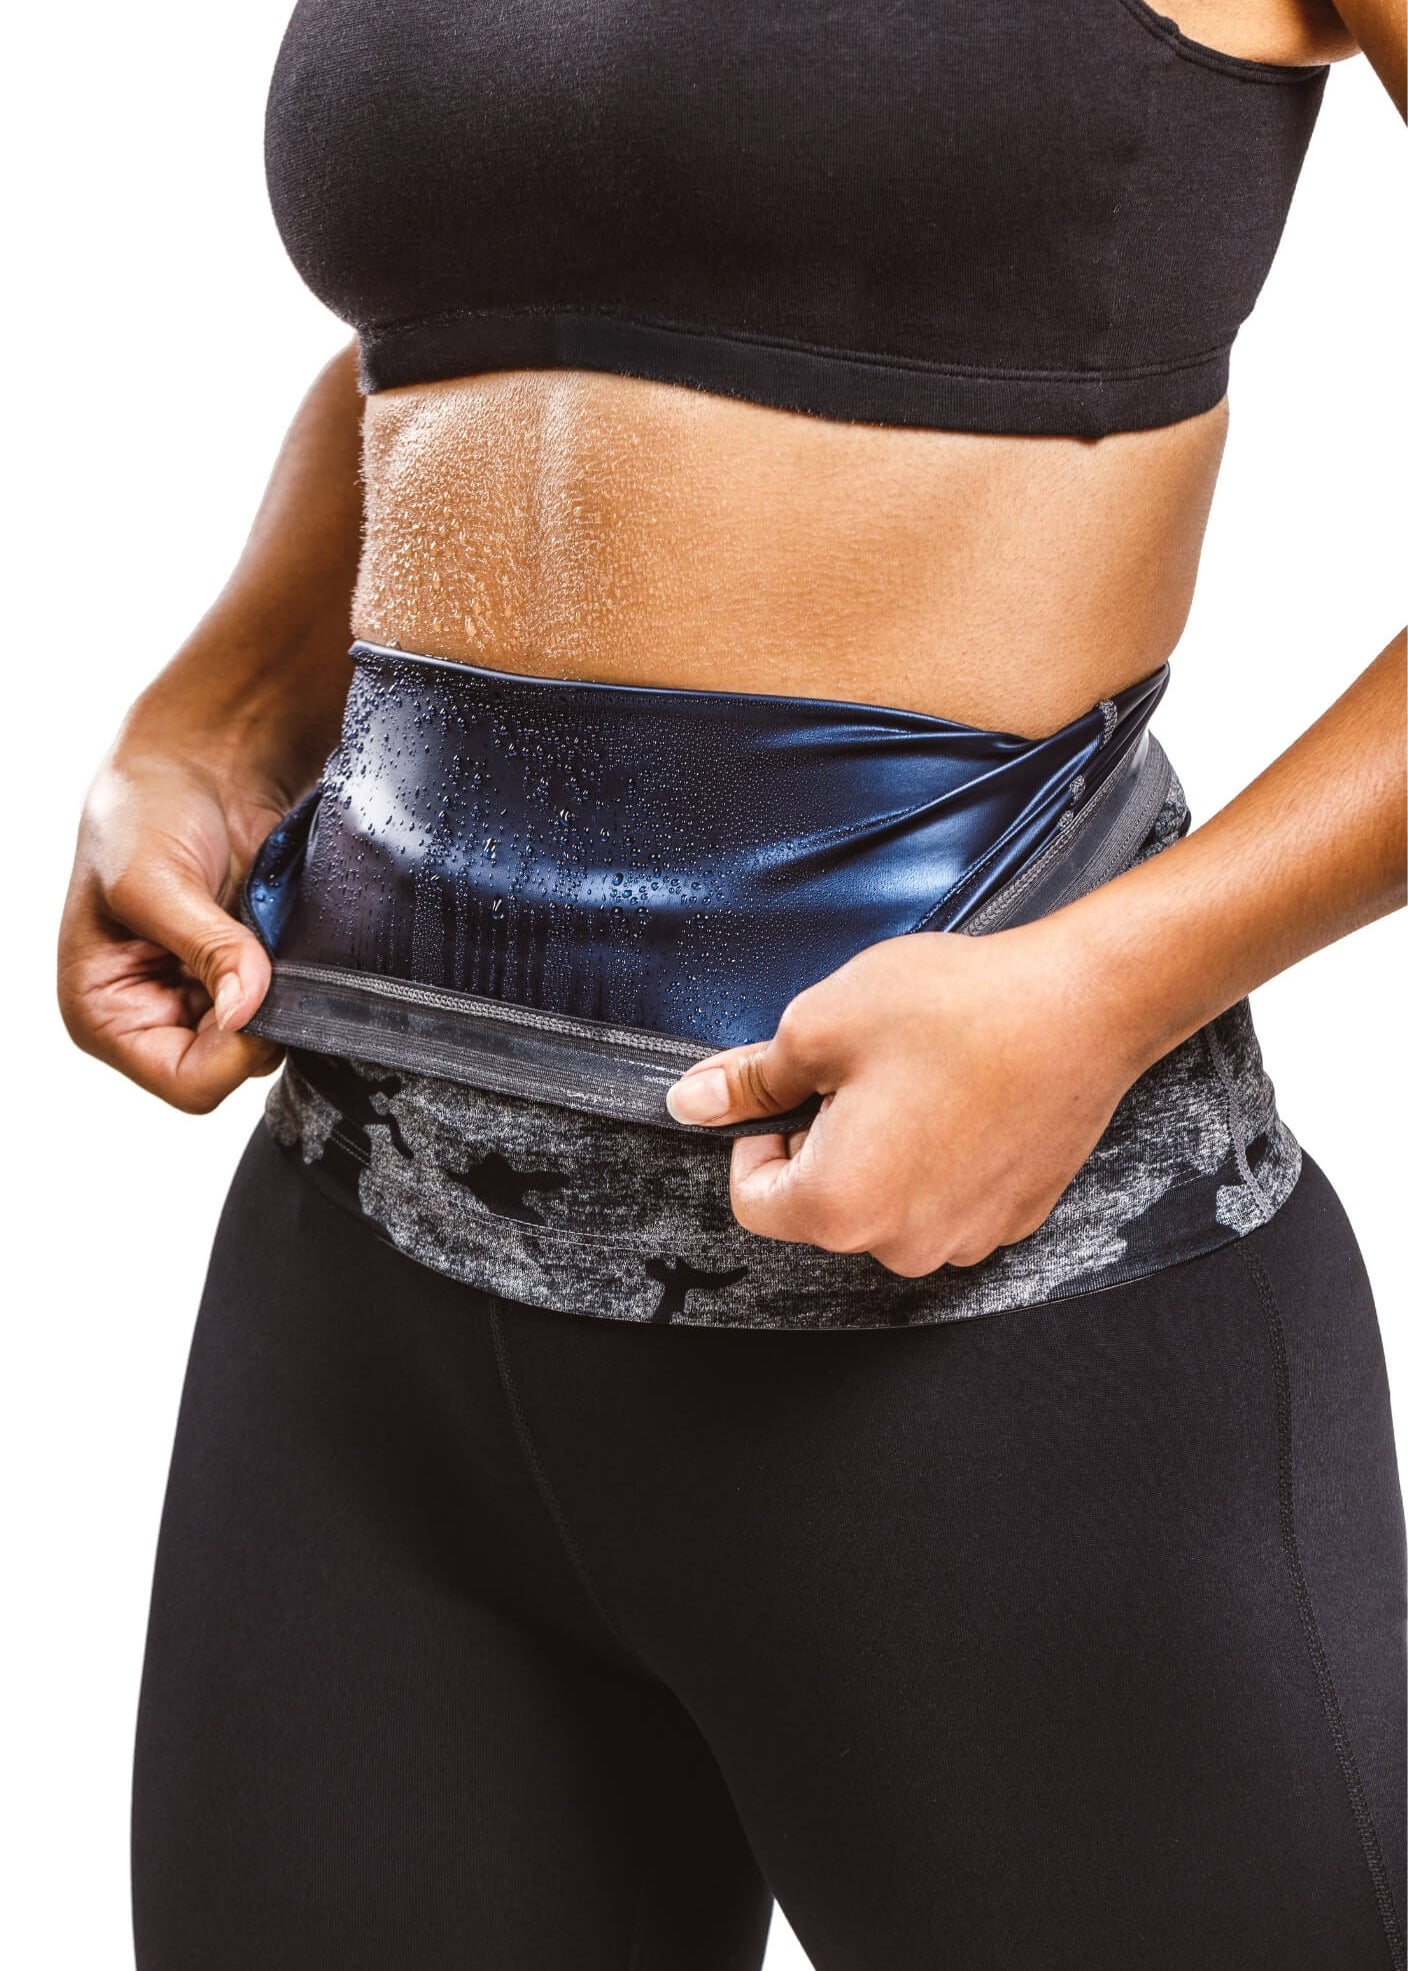  MERMAID'S MYSTERY Waist Trainer for Women Weight Loss Trimmer  Belt Sport Sweat Workout Body Shaper S Black : Sports & Outdoors